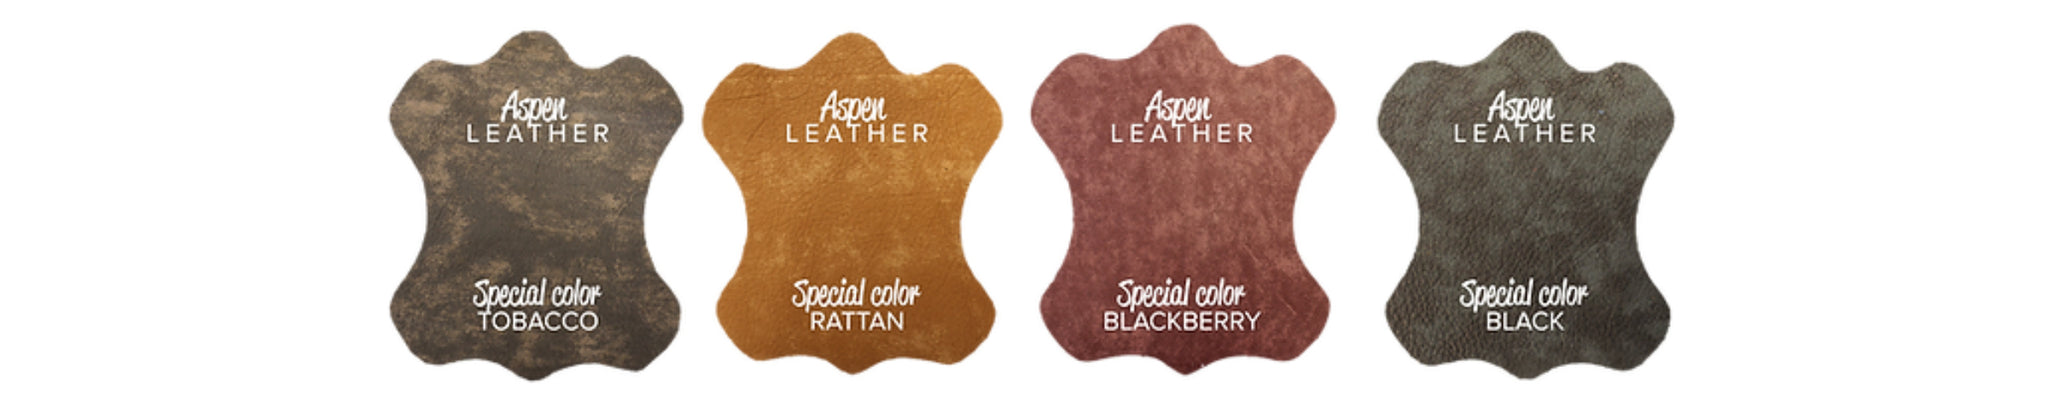 Aspen Leather Options